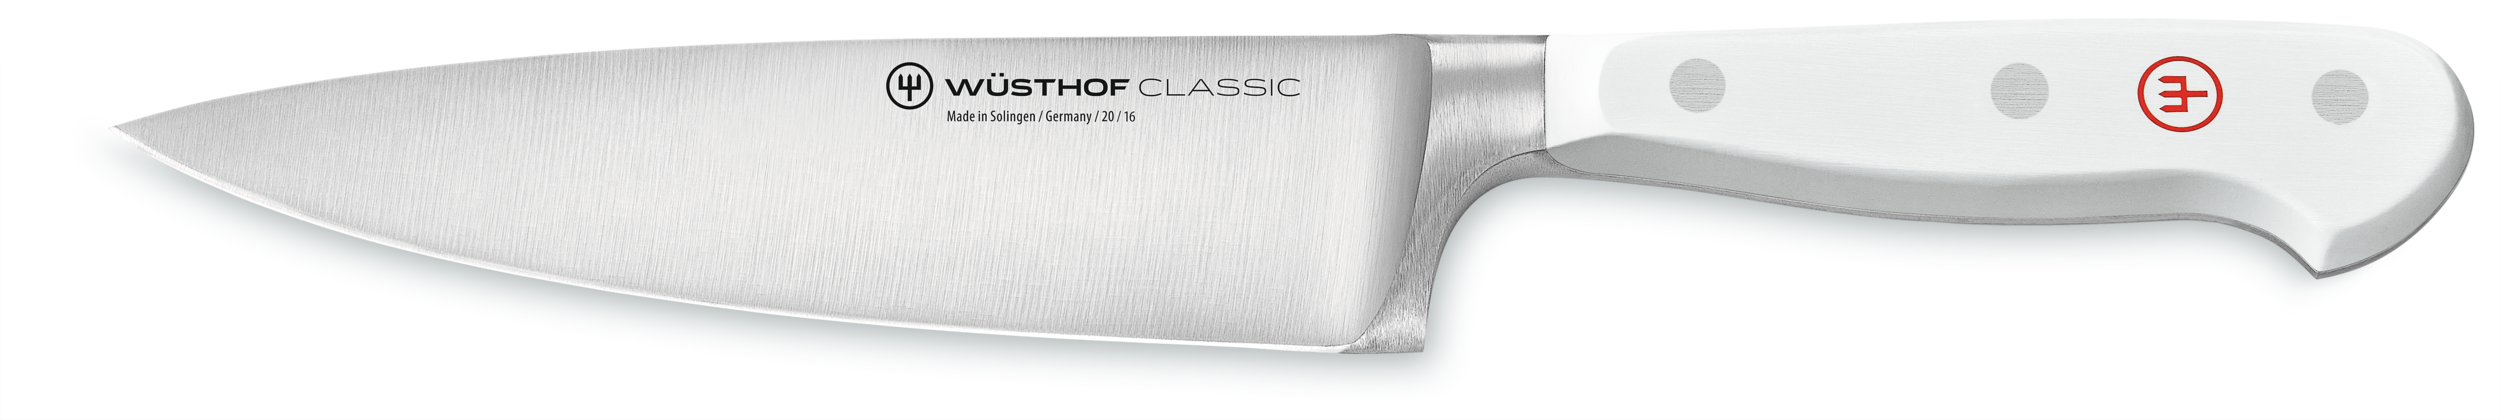 Wusthof Classic White Chef's Knife 16cm 1040200116